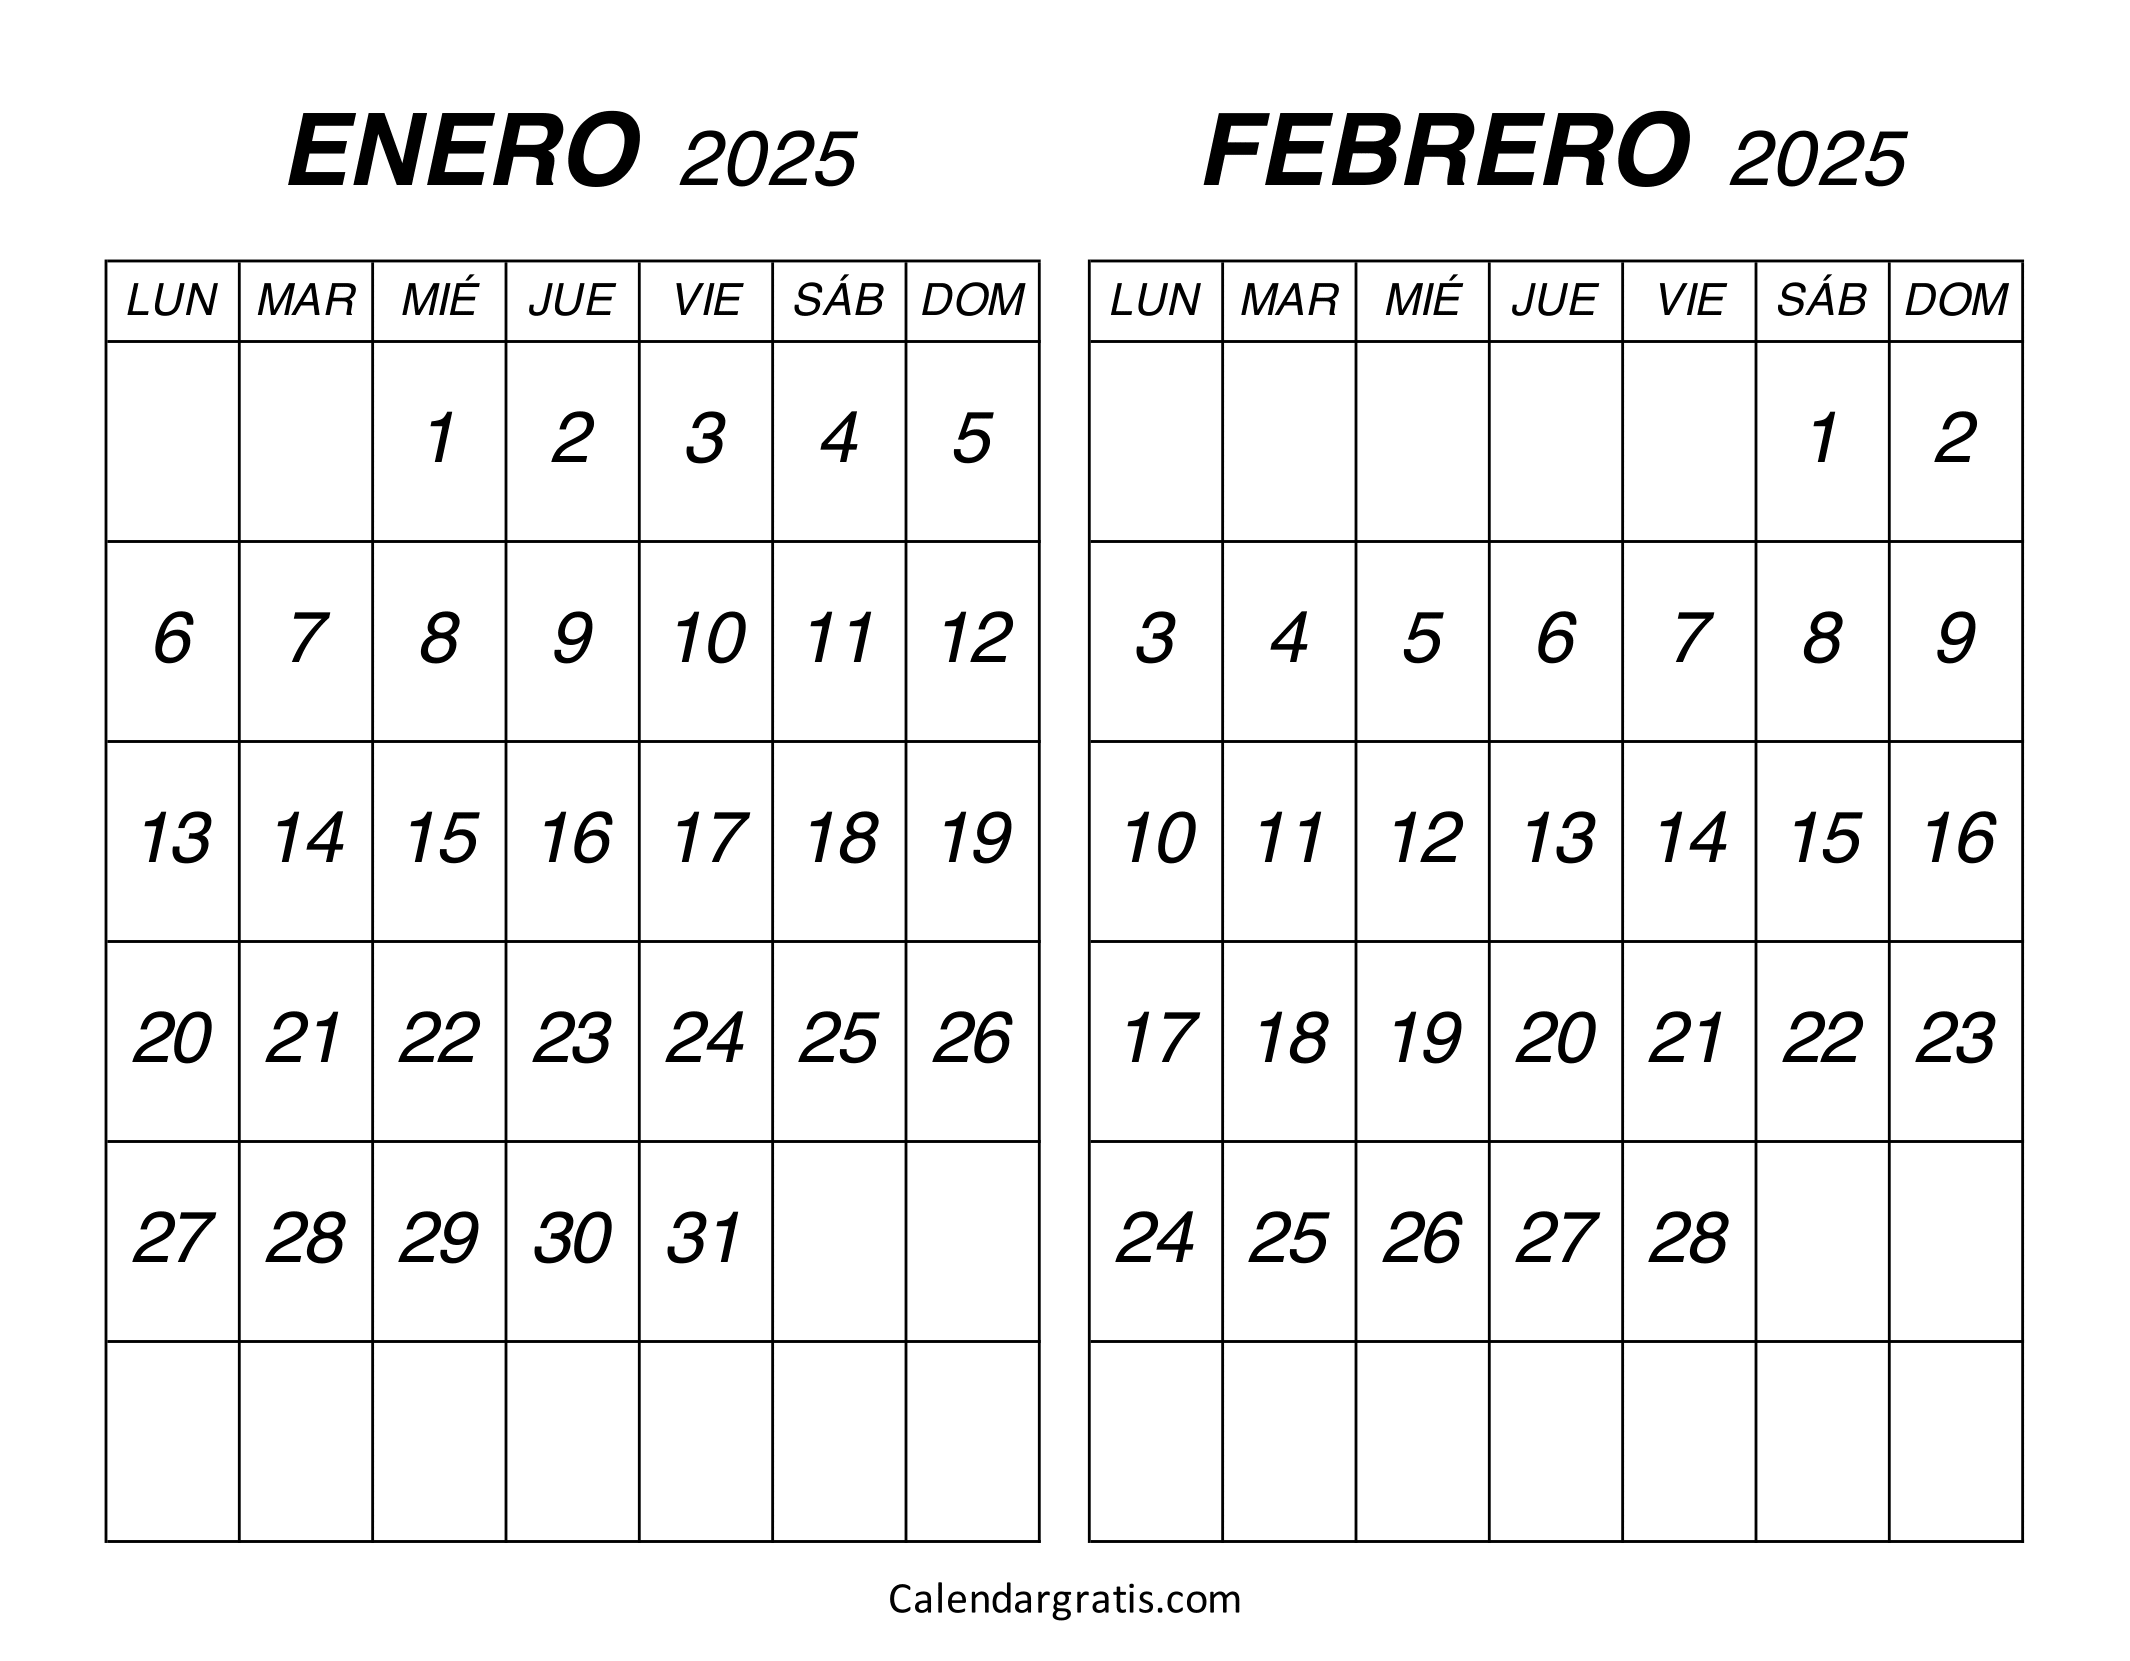 Calendario enero febrero 2025 para imprimir gratis